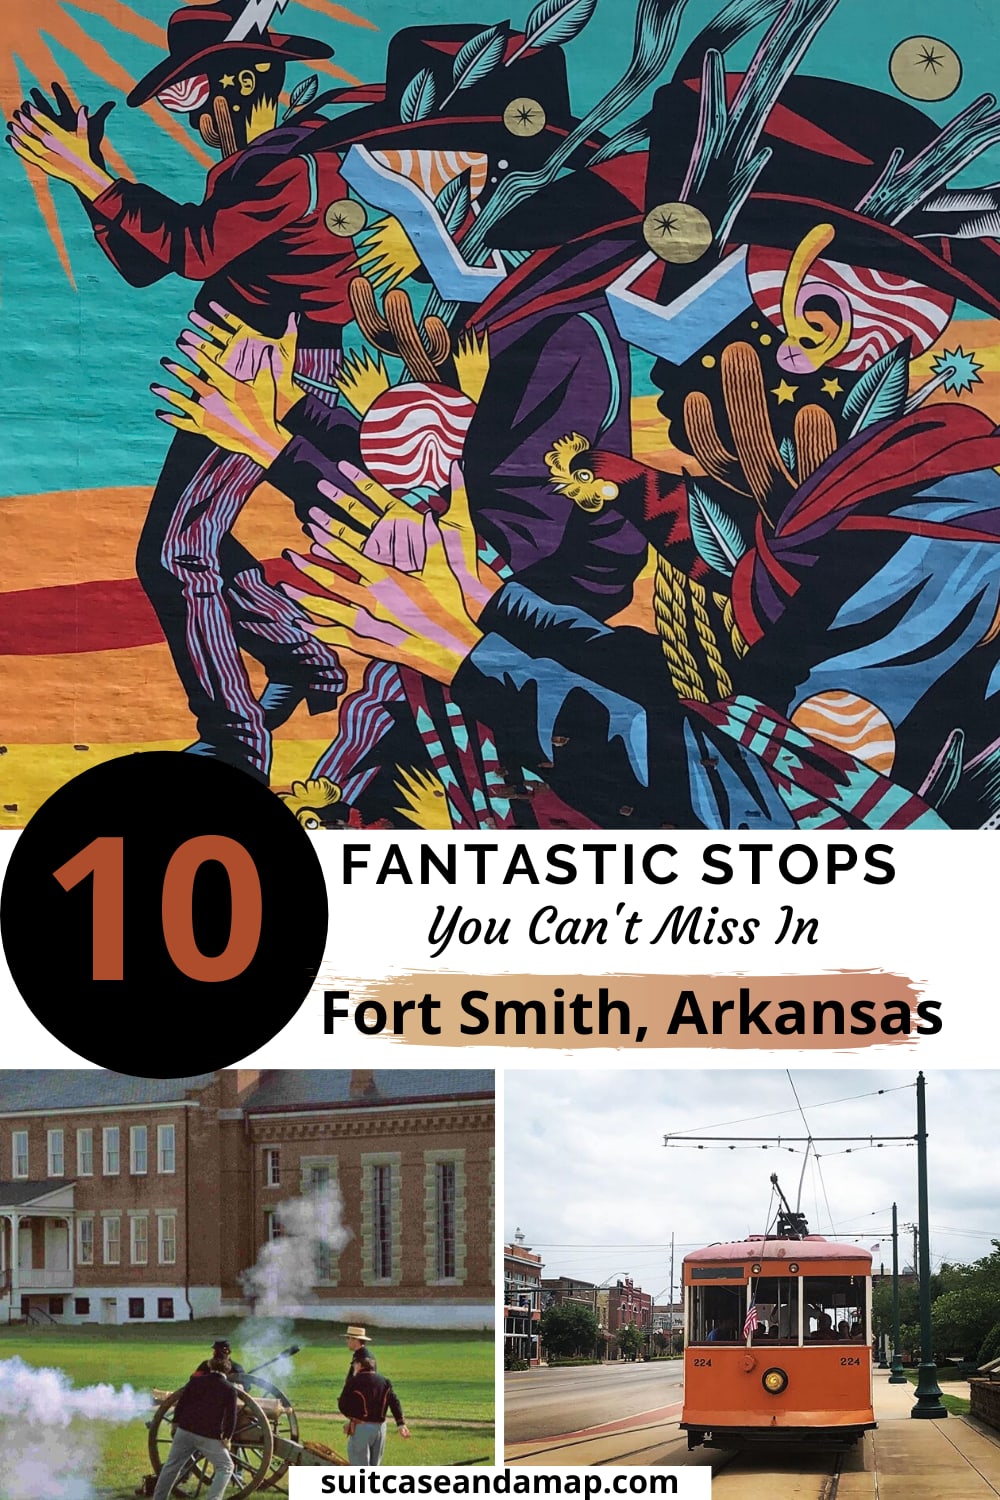 Experience Fort Smith, Arkansas